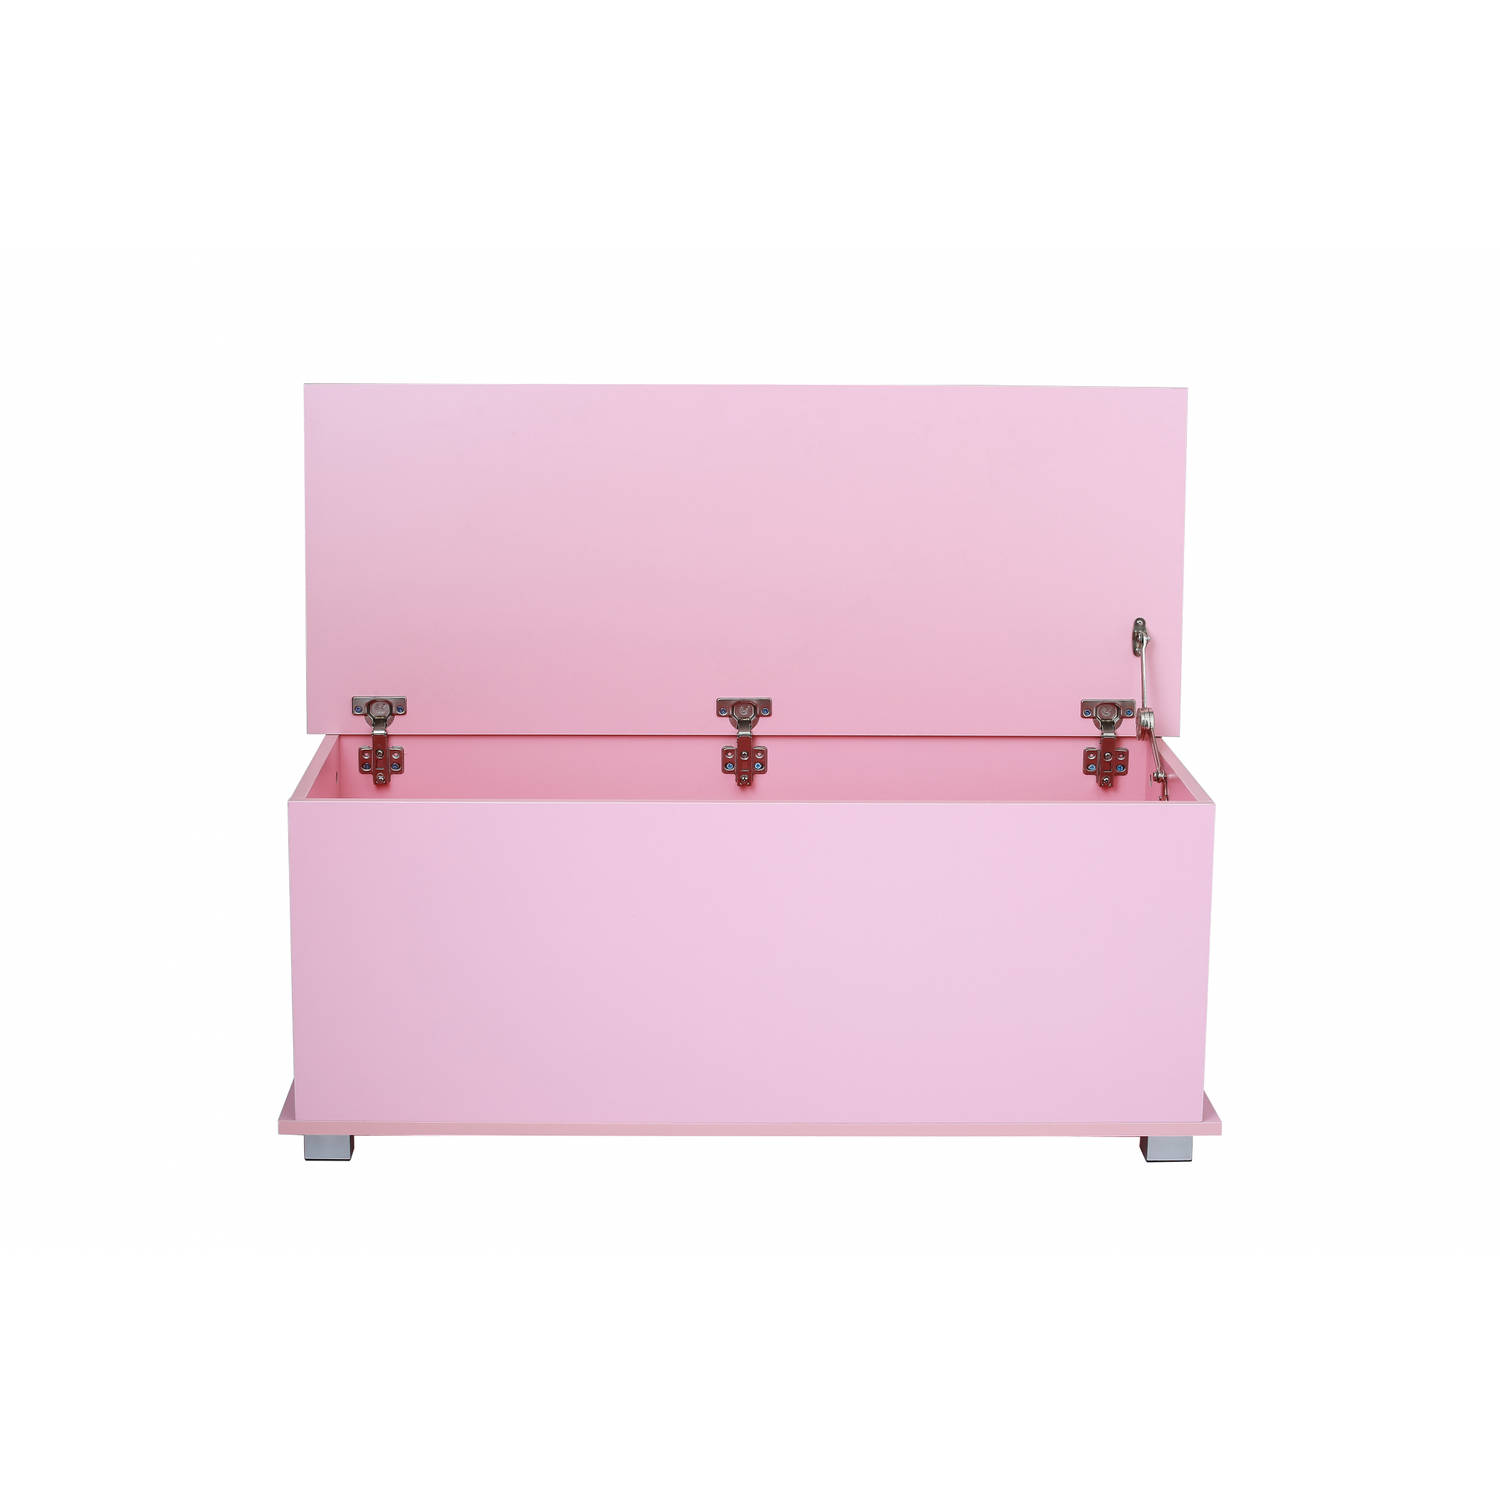 Opbergkist - speelgoedkist - dekenkist - 100 cm breed - roze